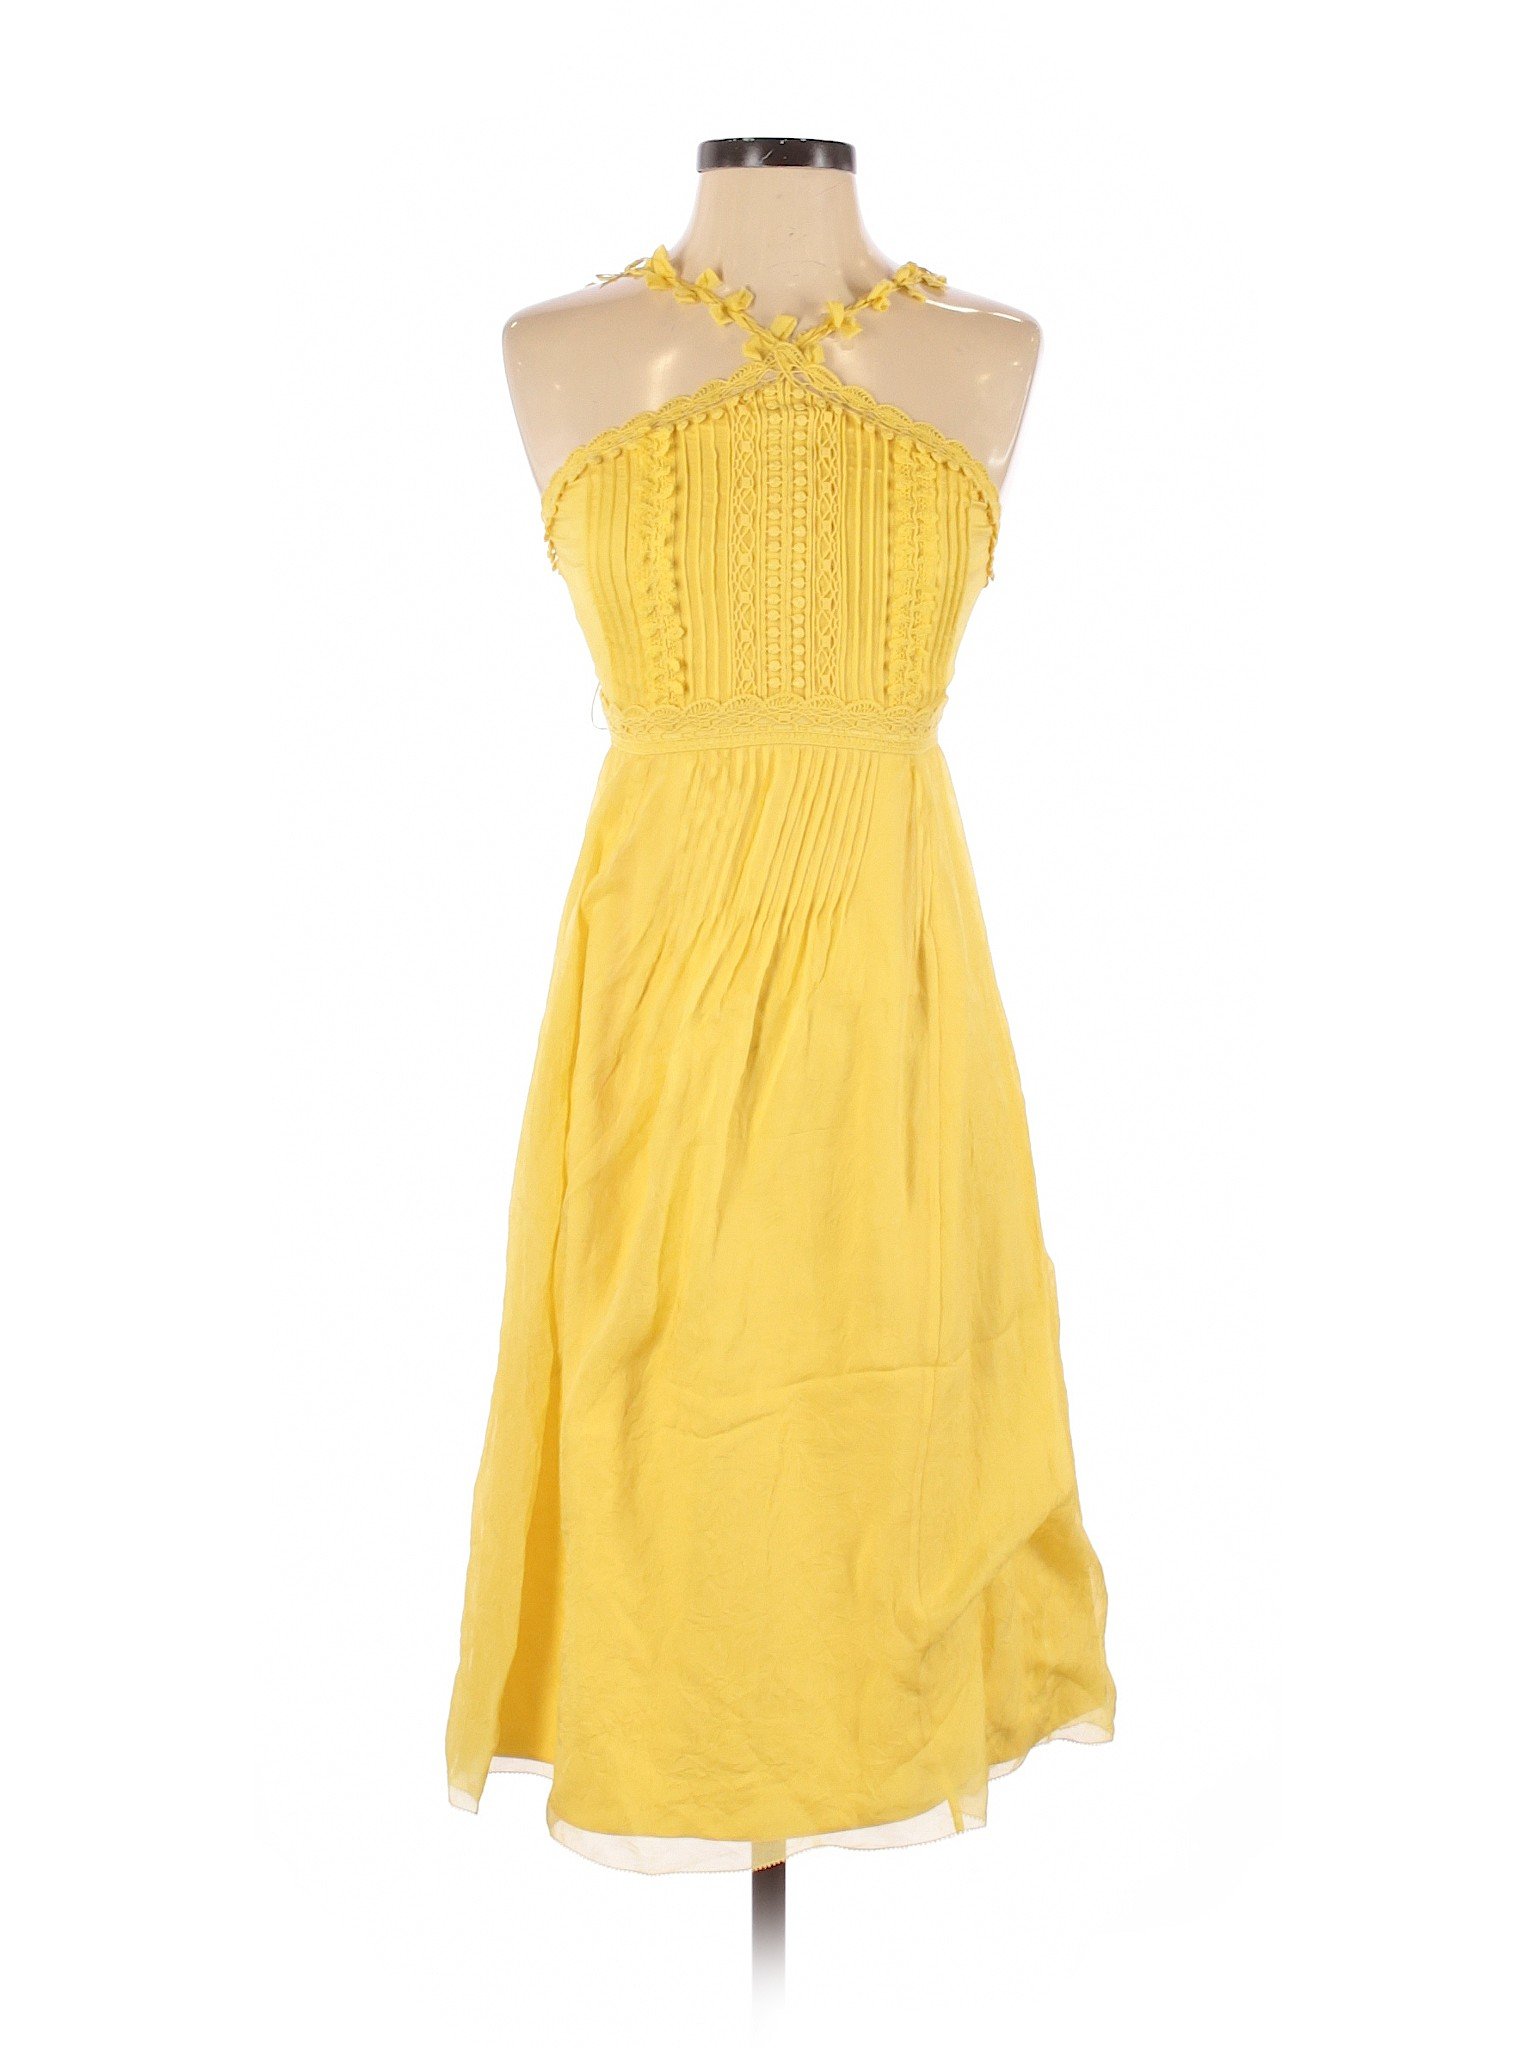 Elie Tahari Women Yellow Cocktail Dress 2 | eBay